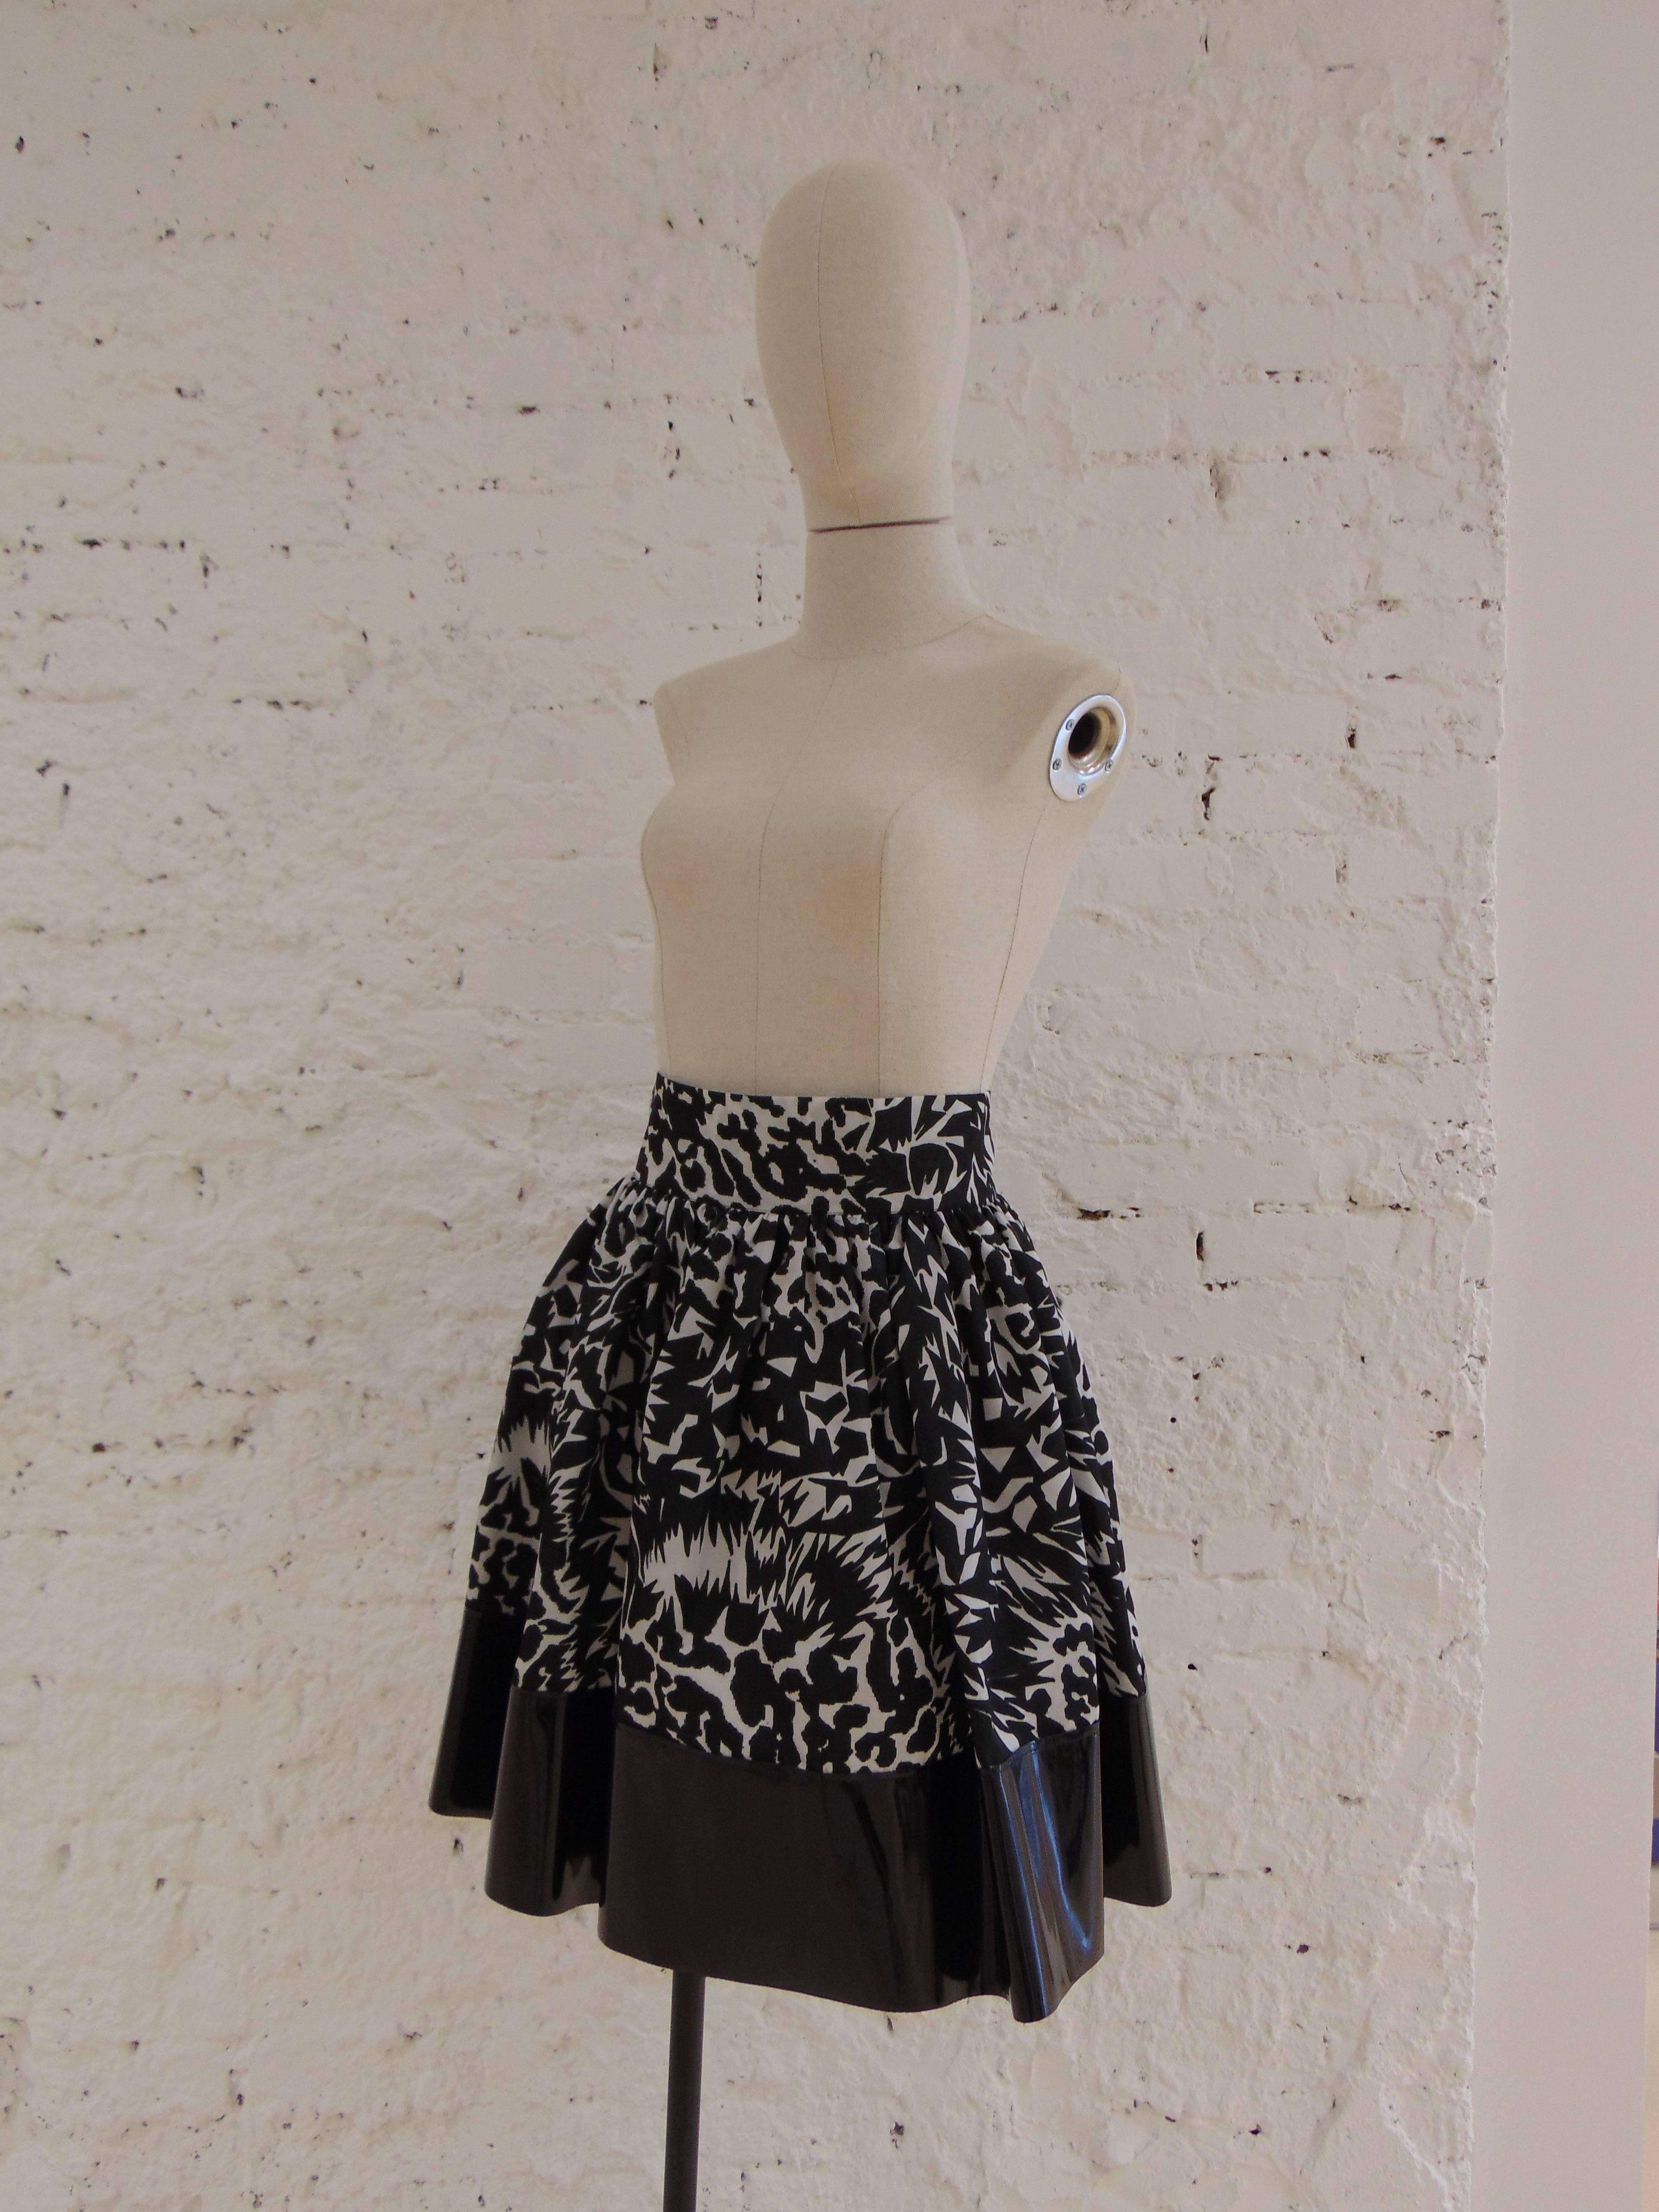 Women's Leitmotiv unworn/nwot skirt with vernish ecoleather details